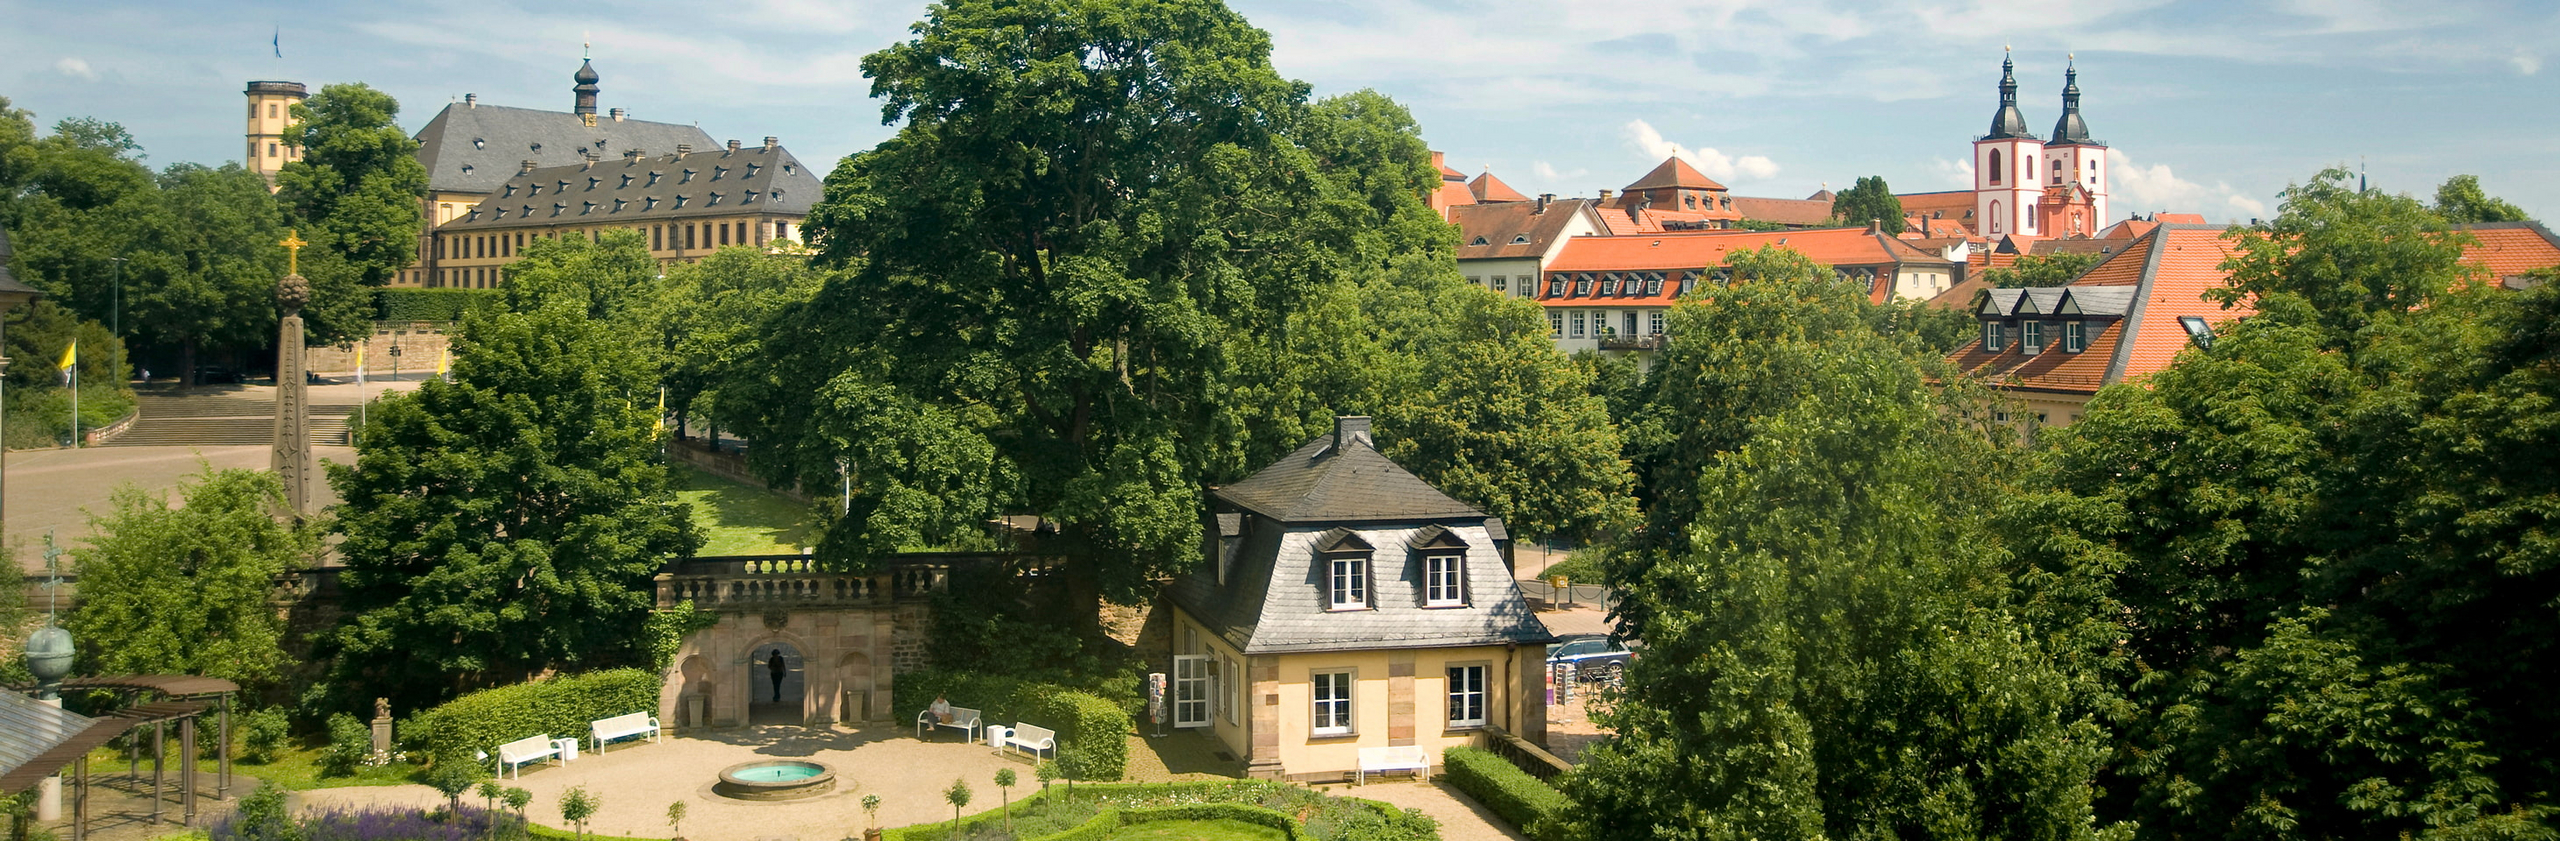 Kultur & Geschichte - Tourismus Fulda